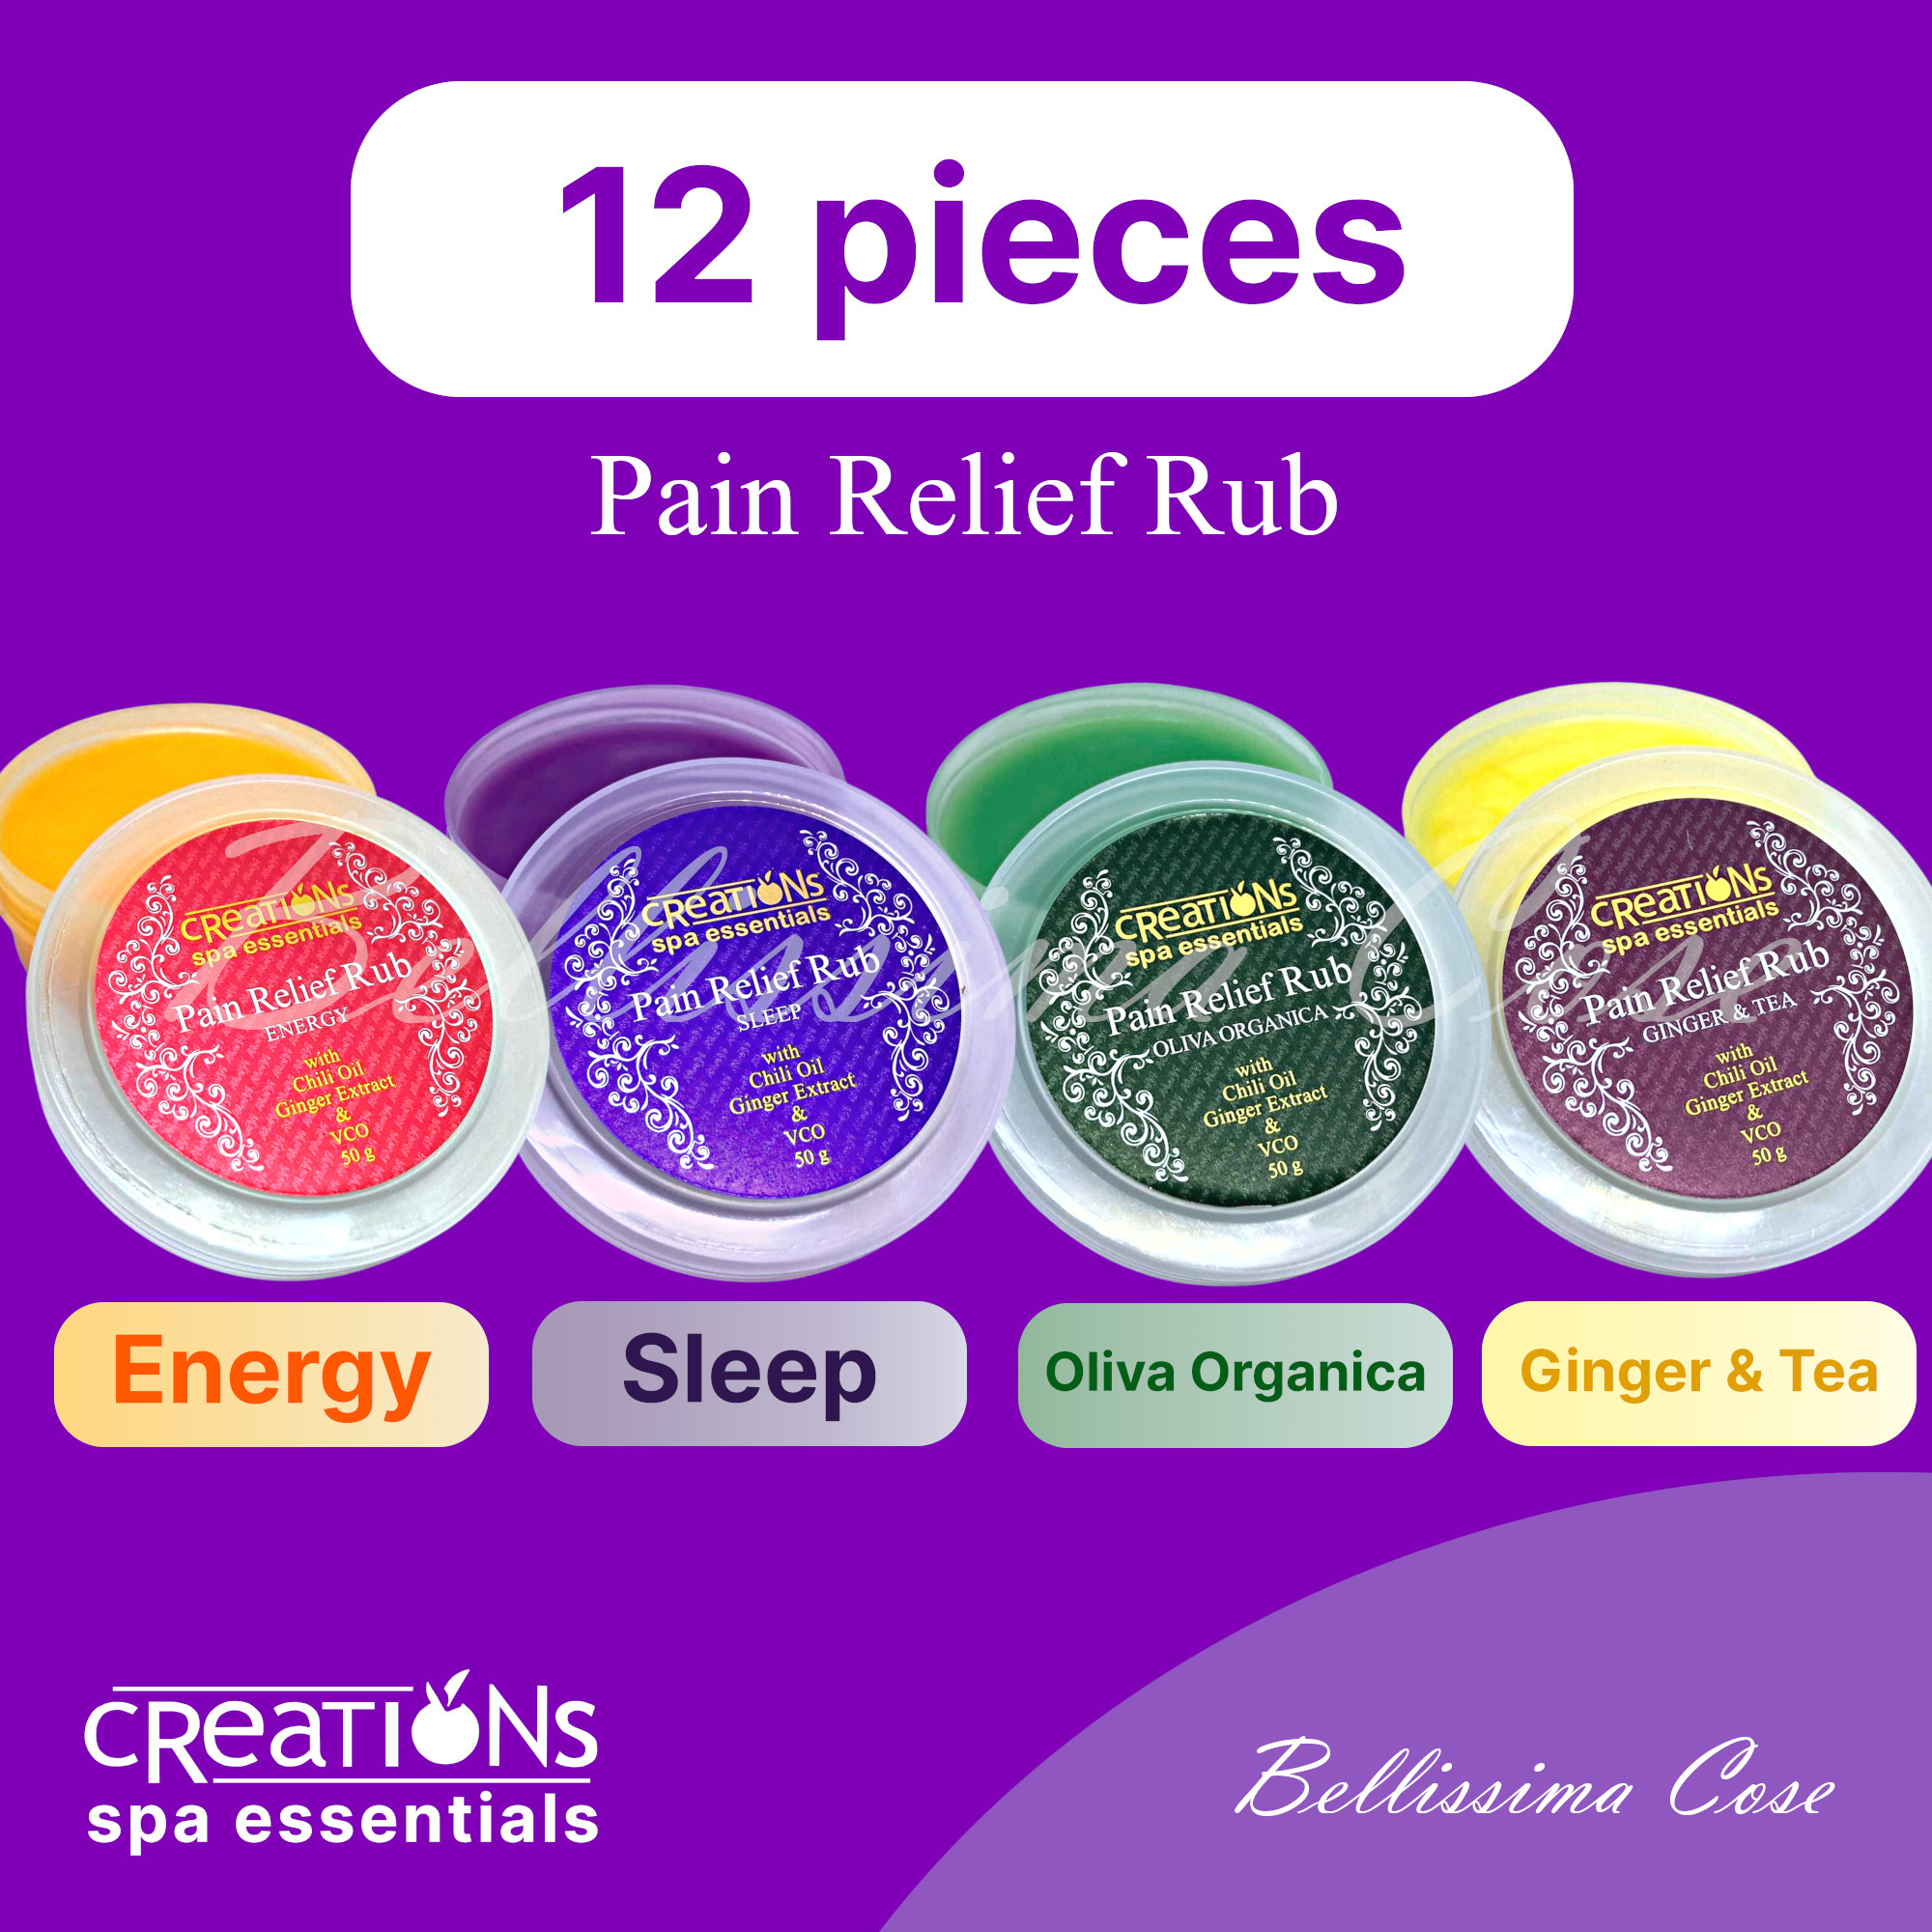 Creations Spa Essentials Pain Relief Rub - 12 PCS.